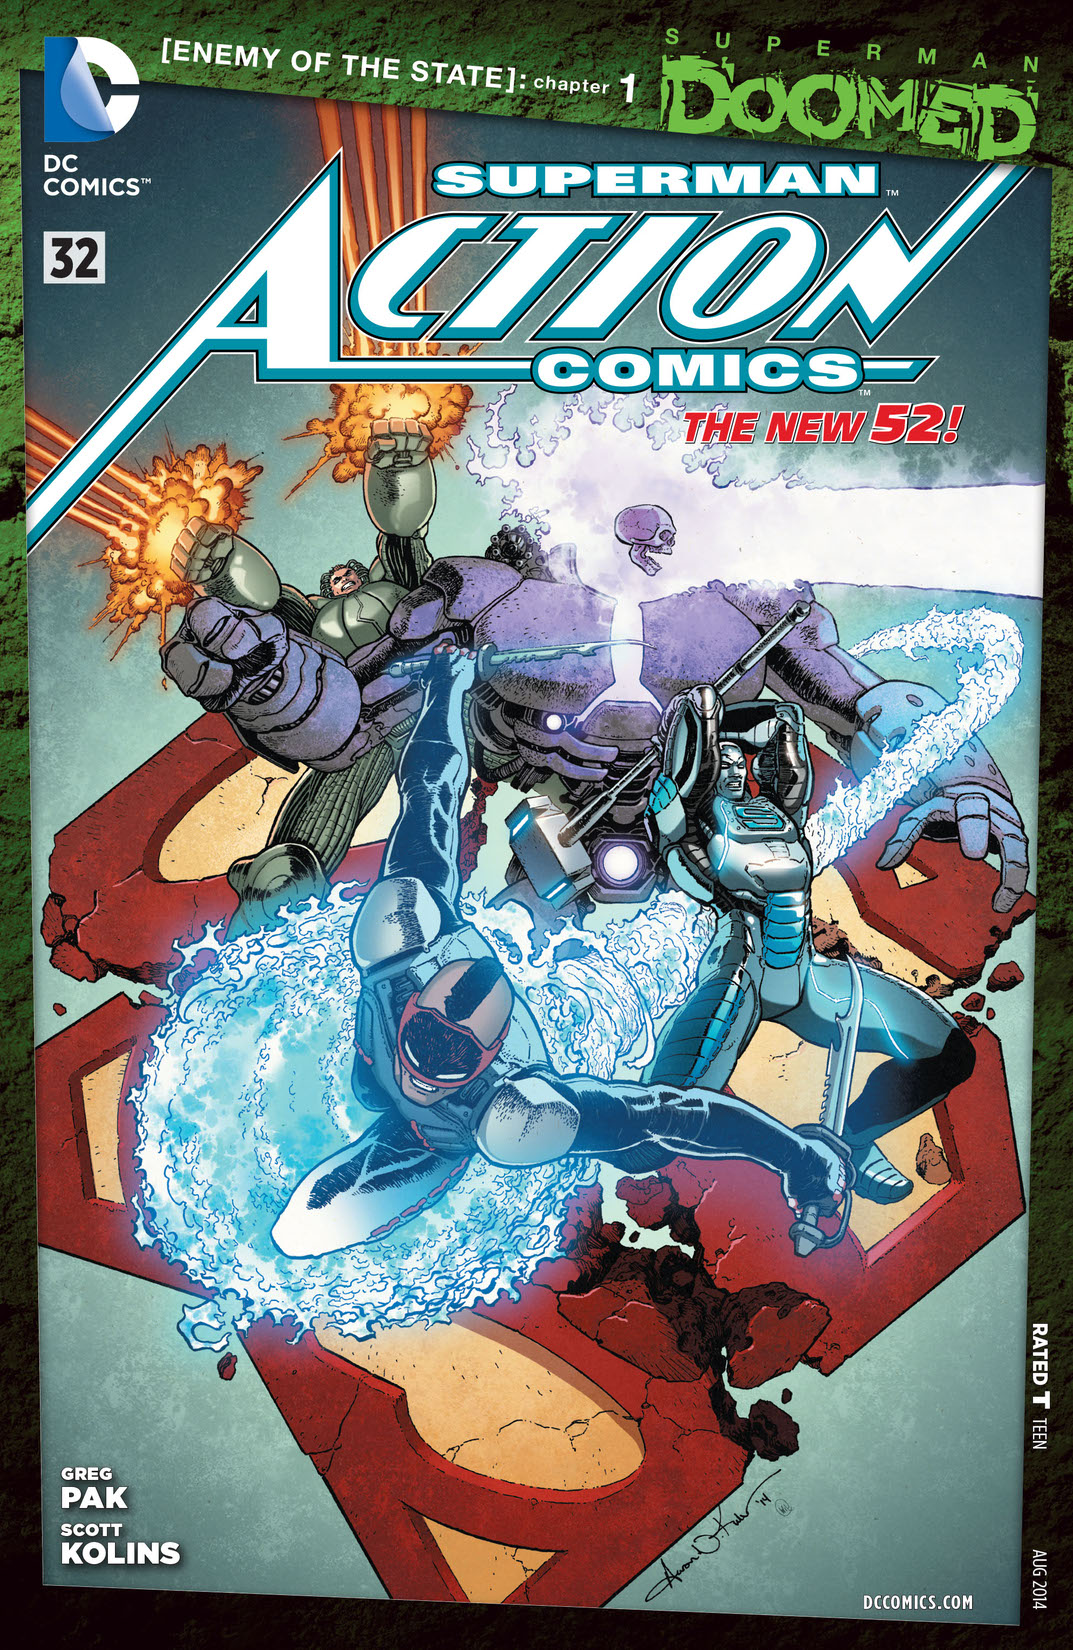 Action Comics (2011-) #32 preview images